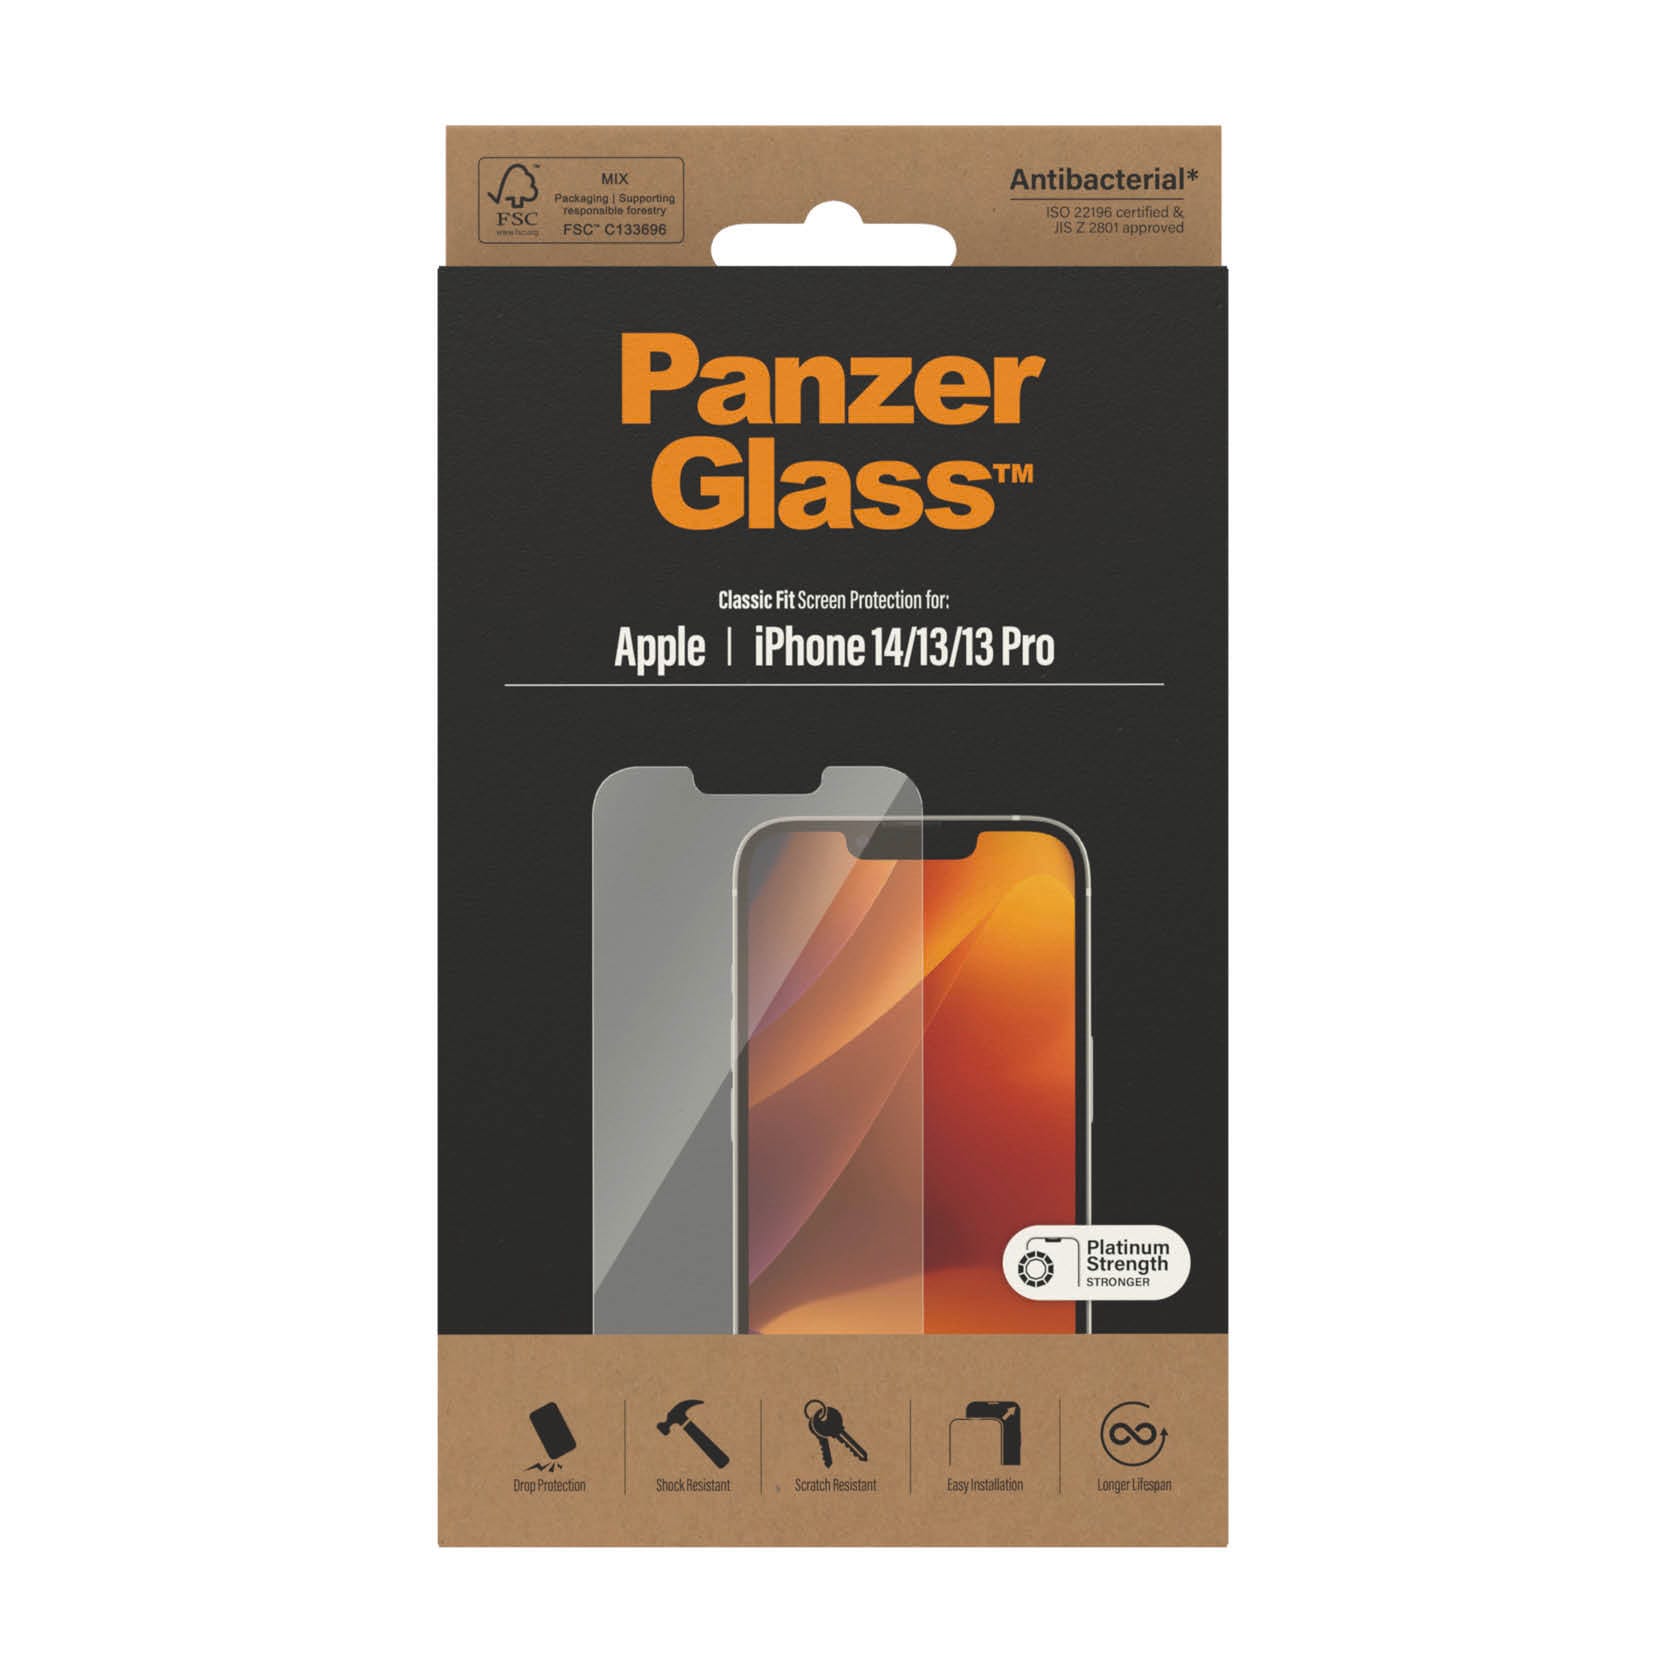 PanzerGlass Displayschutzglas »iPhone 14/13/13 Pro AB«